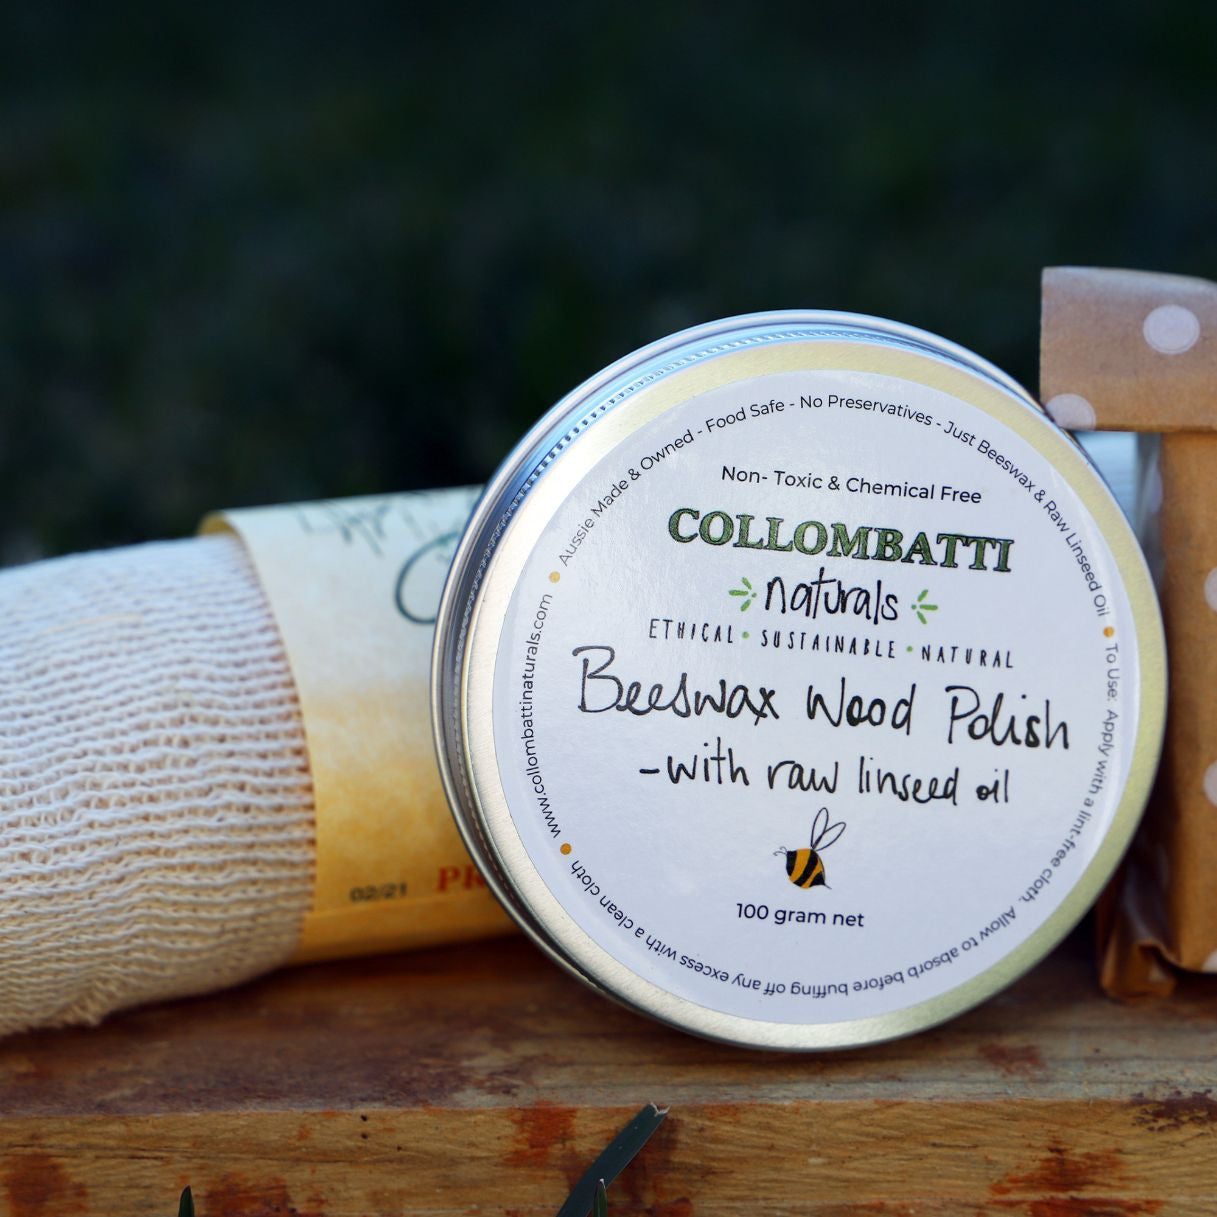 Collombatti Naturals Beeswax wood polish with cotton polishing cloth